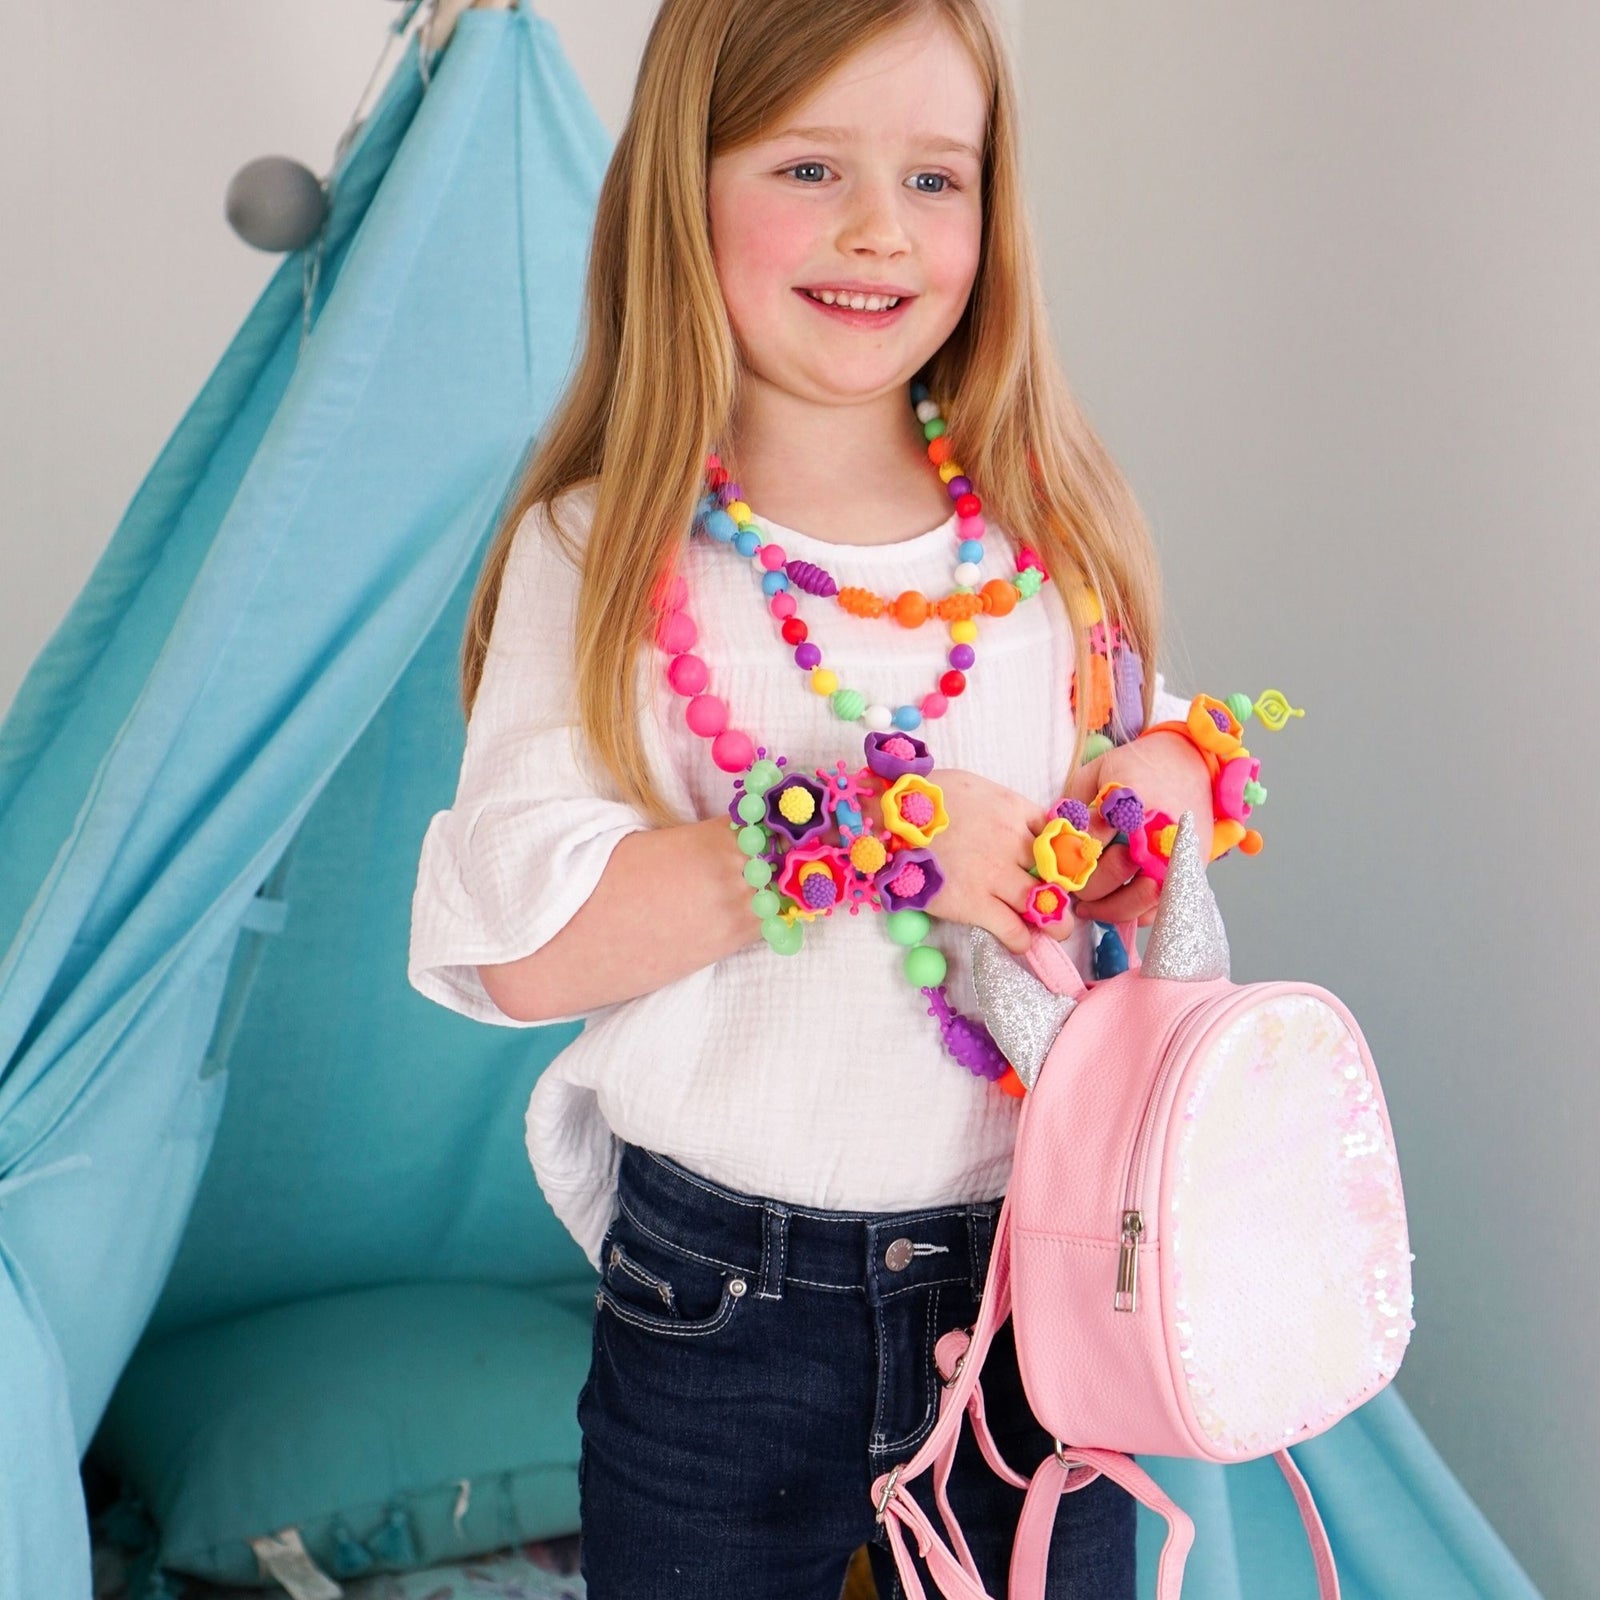 Snap Pop Beads for Girls Toys - 600PCS Kids Jewelry Making Kit Pop